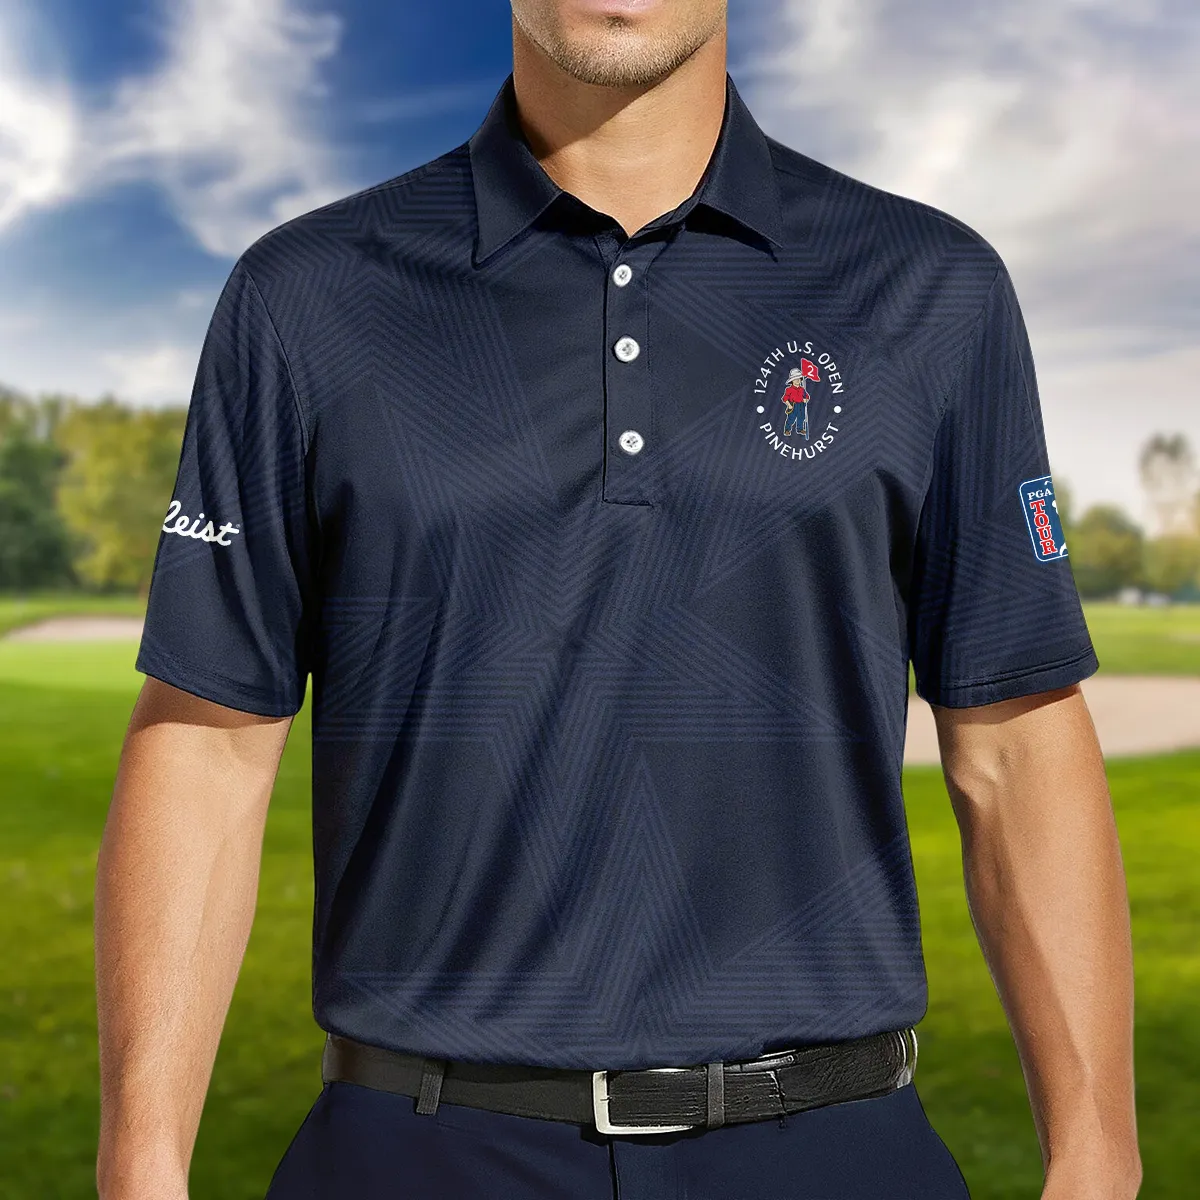 Golf Navy Color Star Pattern 124th U.S. Open Pinehurst Titlest Hoodie Shirt Style Classic